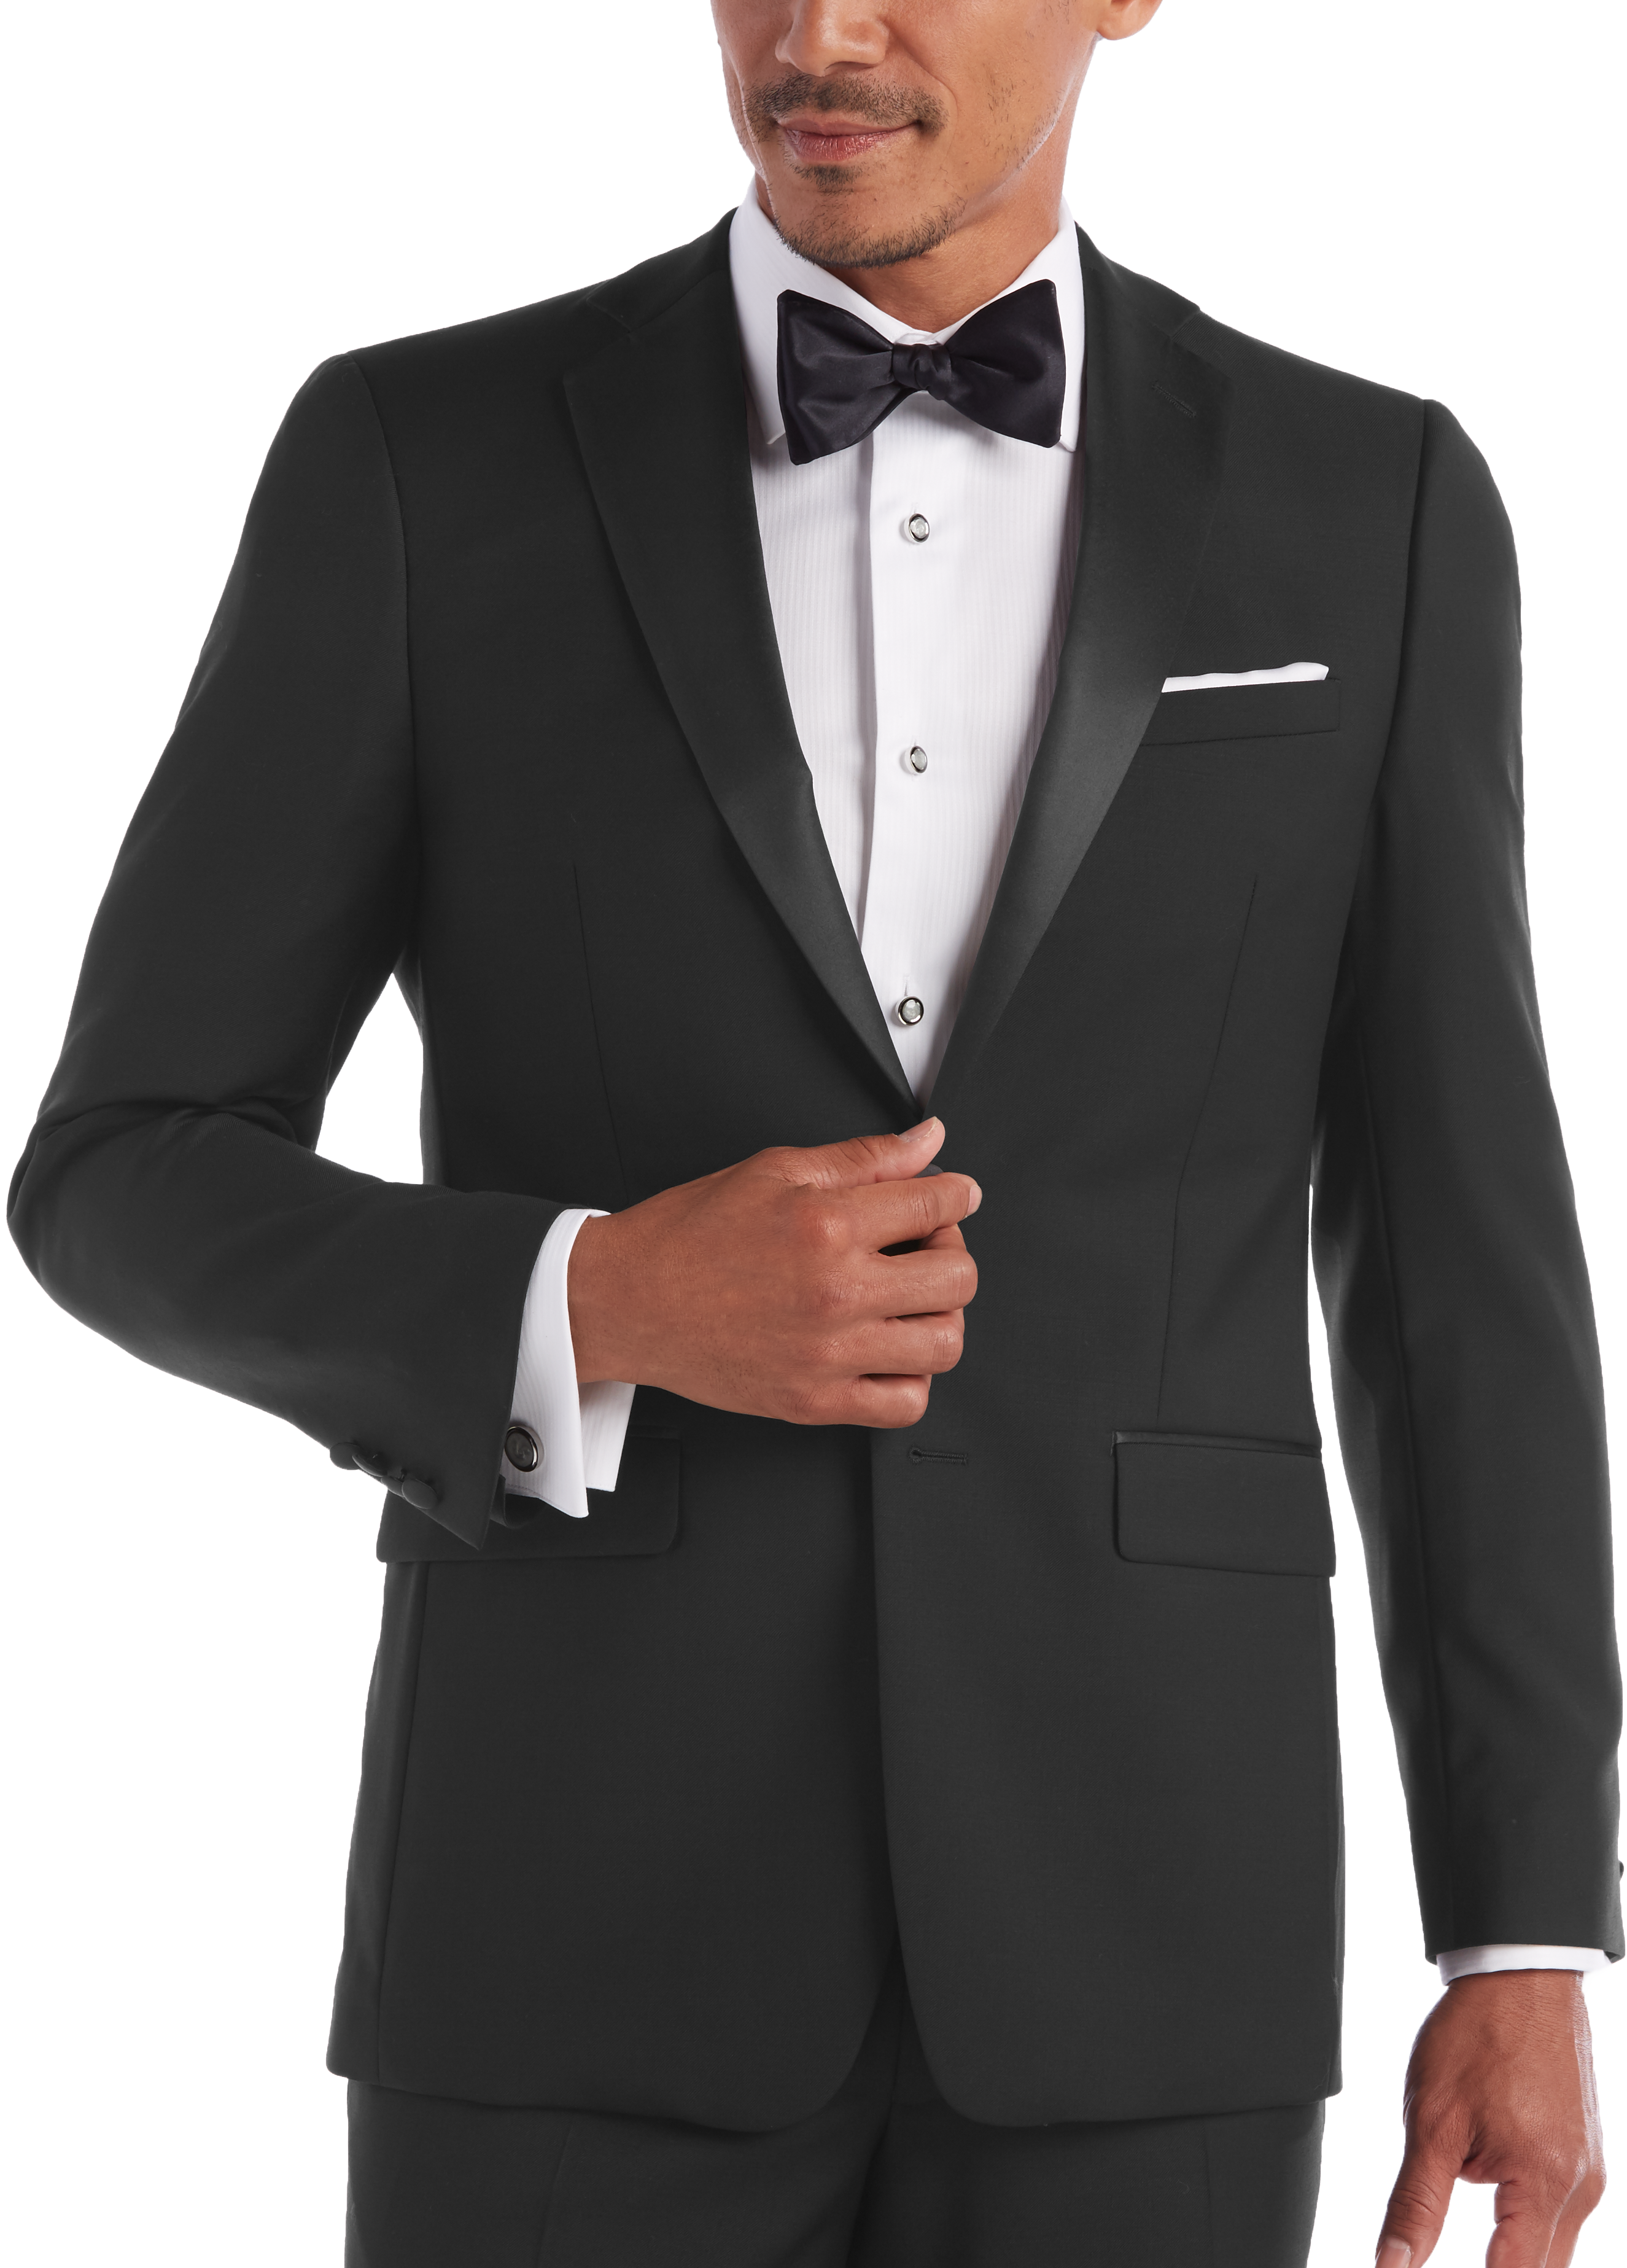 Tuxedo – Fashion dresses